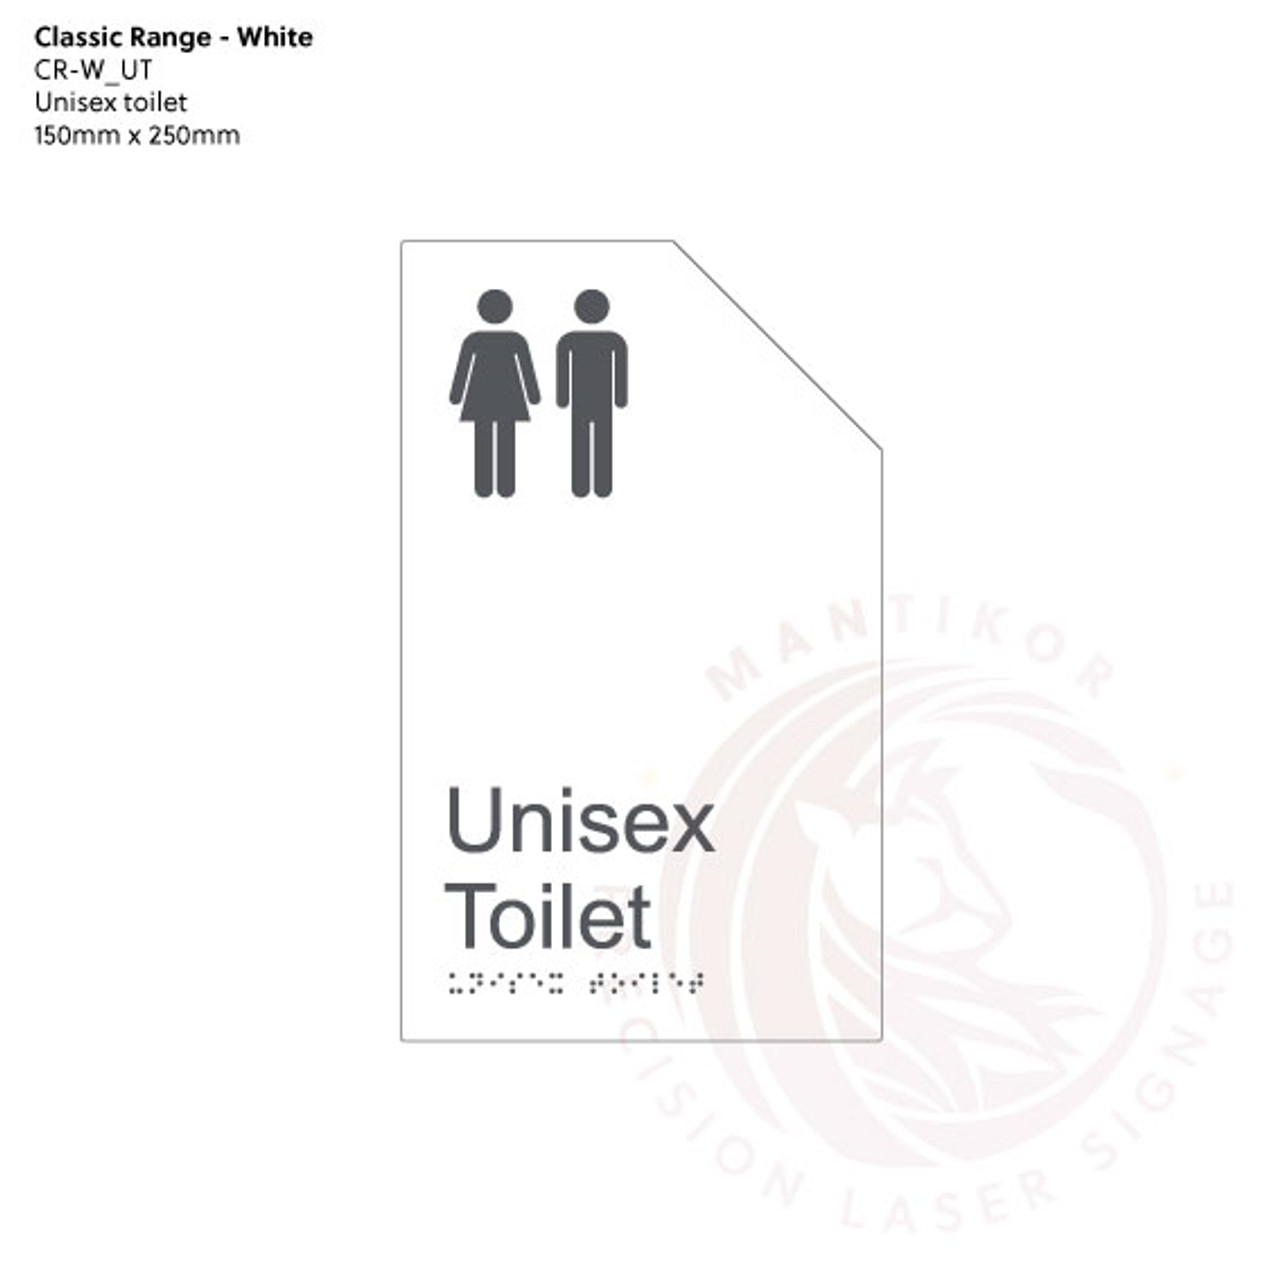 Classic Range - Matte White Acrylic Braille Signs - Unisex Toilet